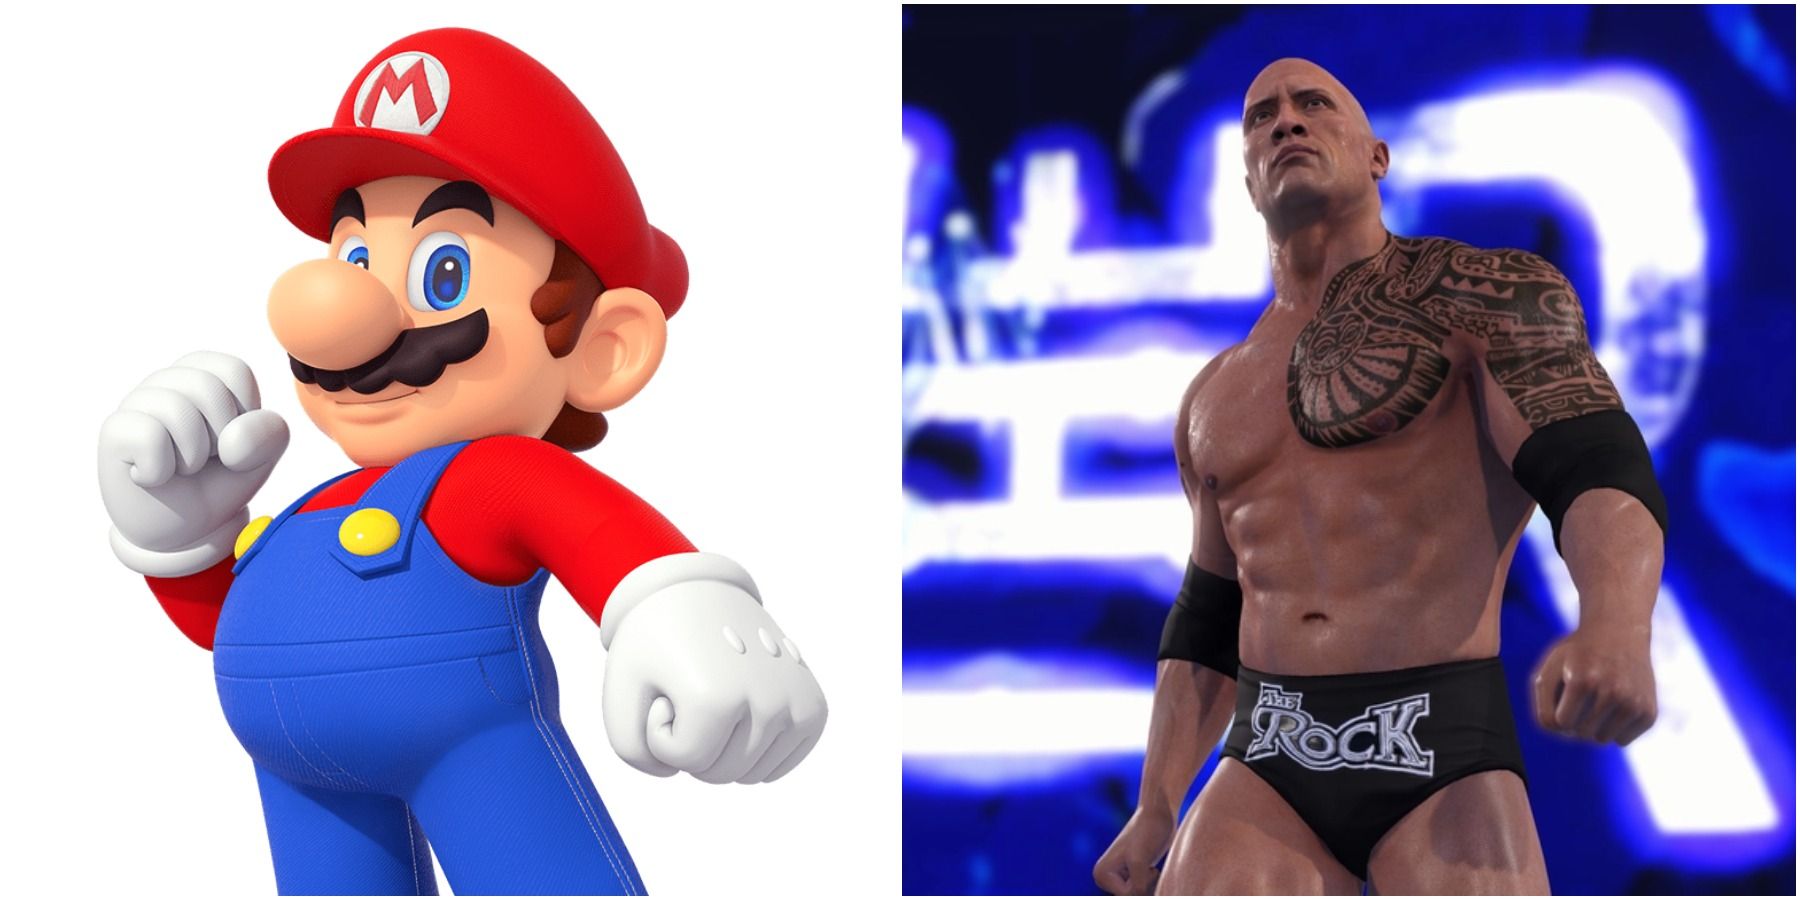 (Left) Mario (Right) The Rock